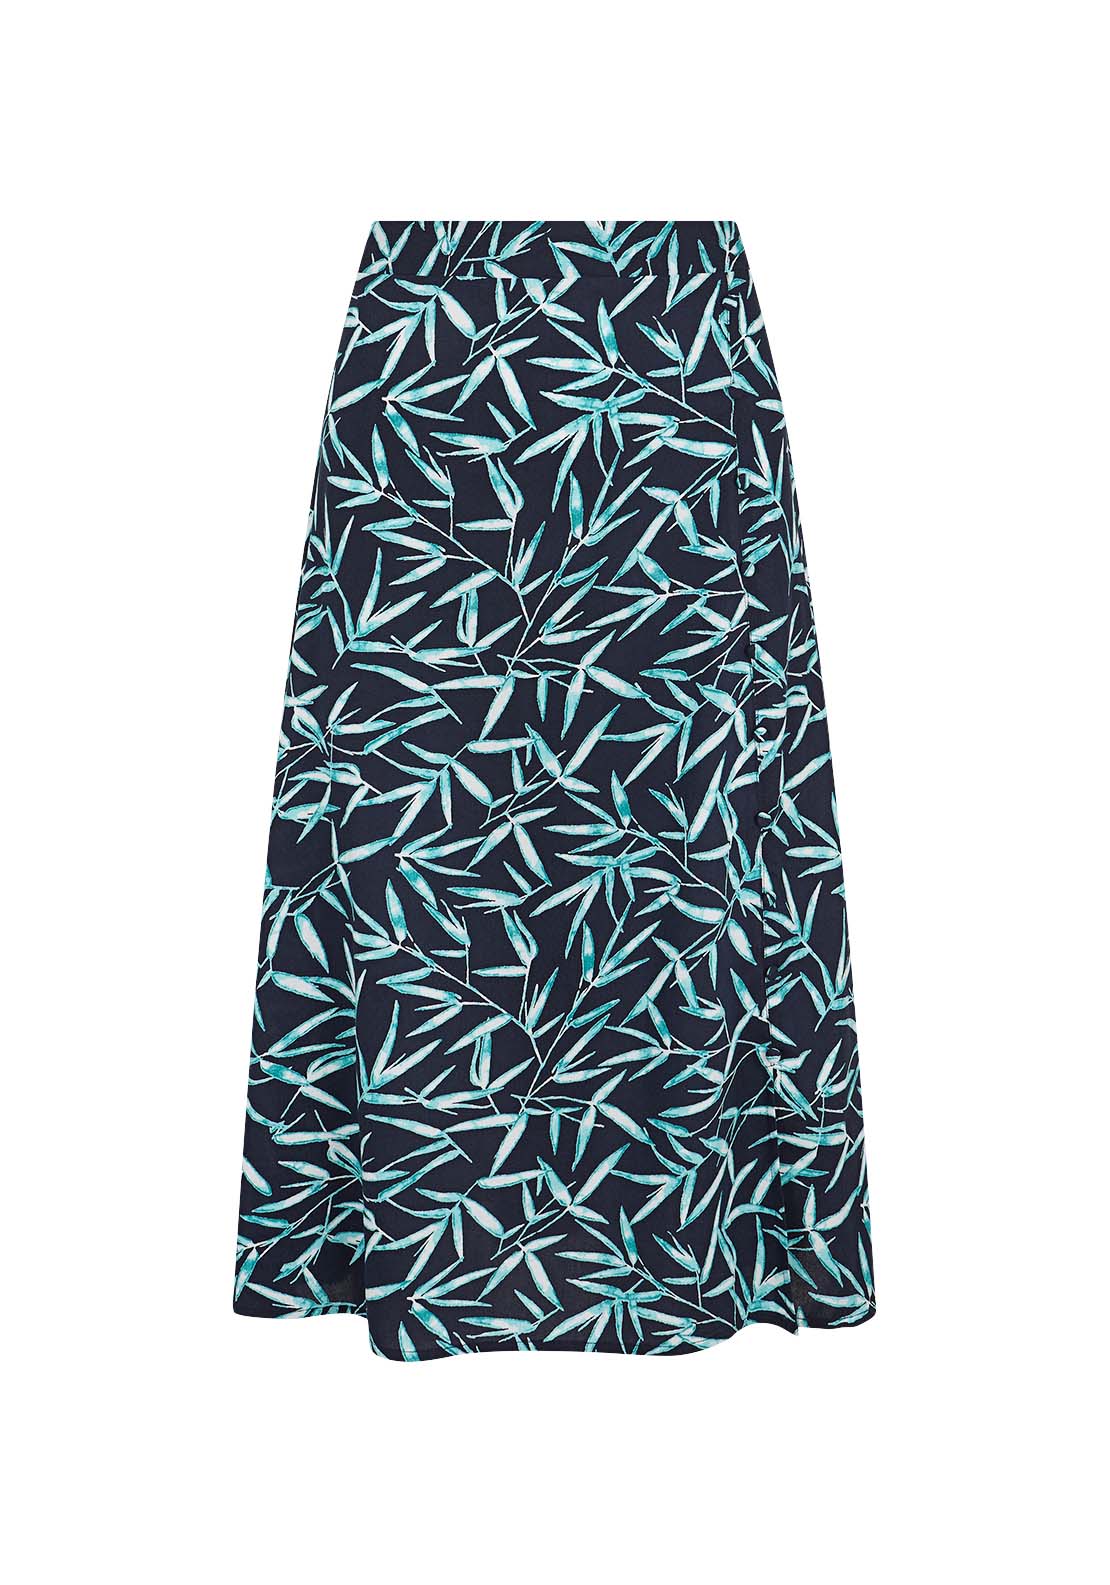 Tigiwear Turquoise Bamboo Leaf Print Skirt 2 Shaws Department Stores